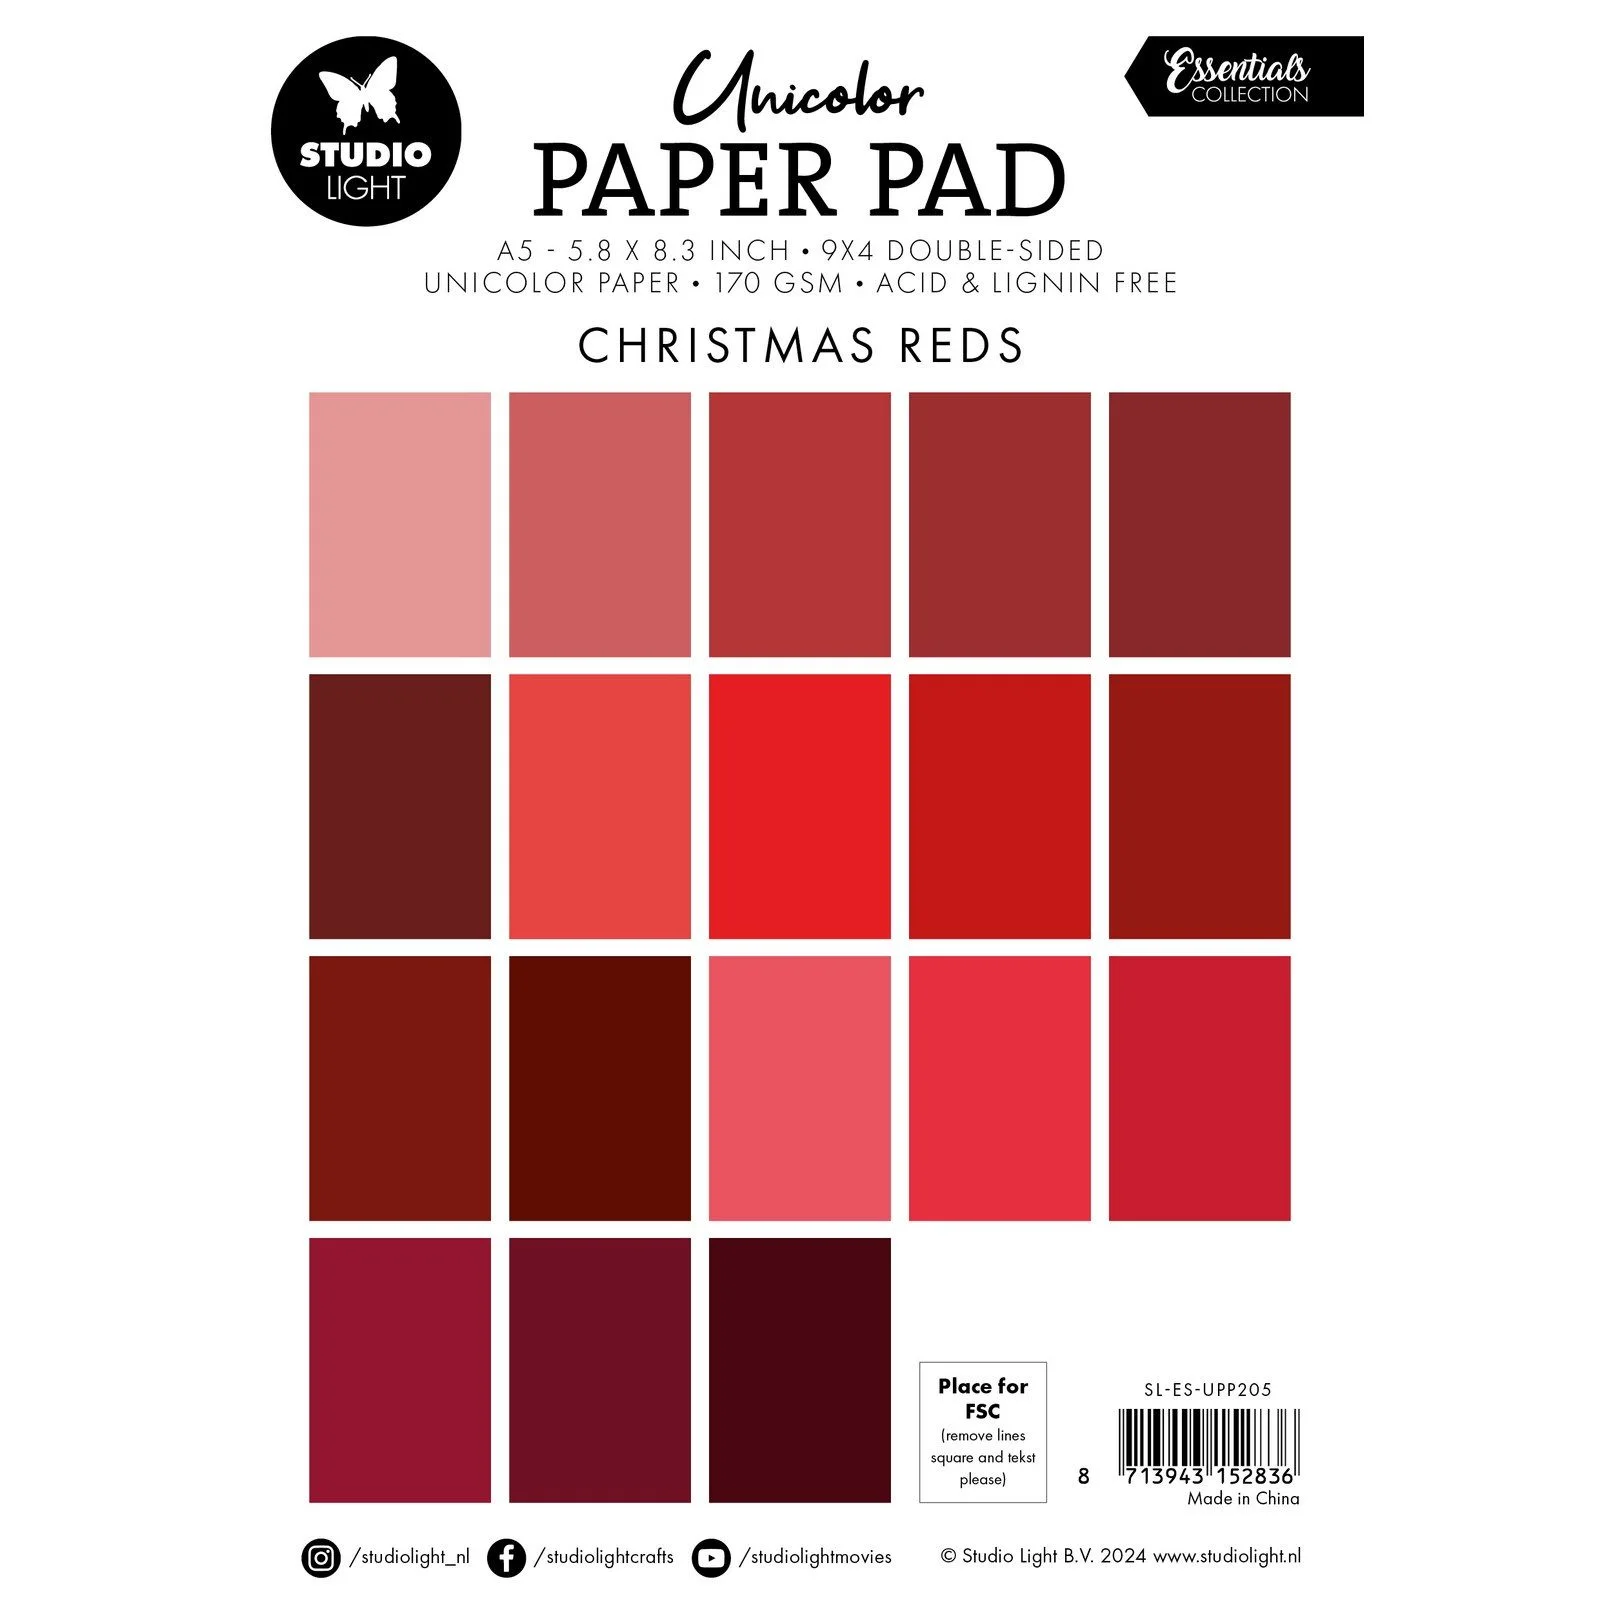 SL-ES-UPP205 Studio Light Paper Pad "Christmas Reds" karton papir blok nuancer af mørkerød rosa Julerød Julefarver karton papir